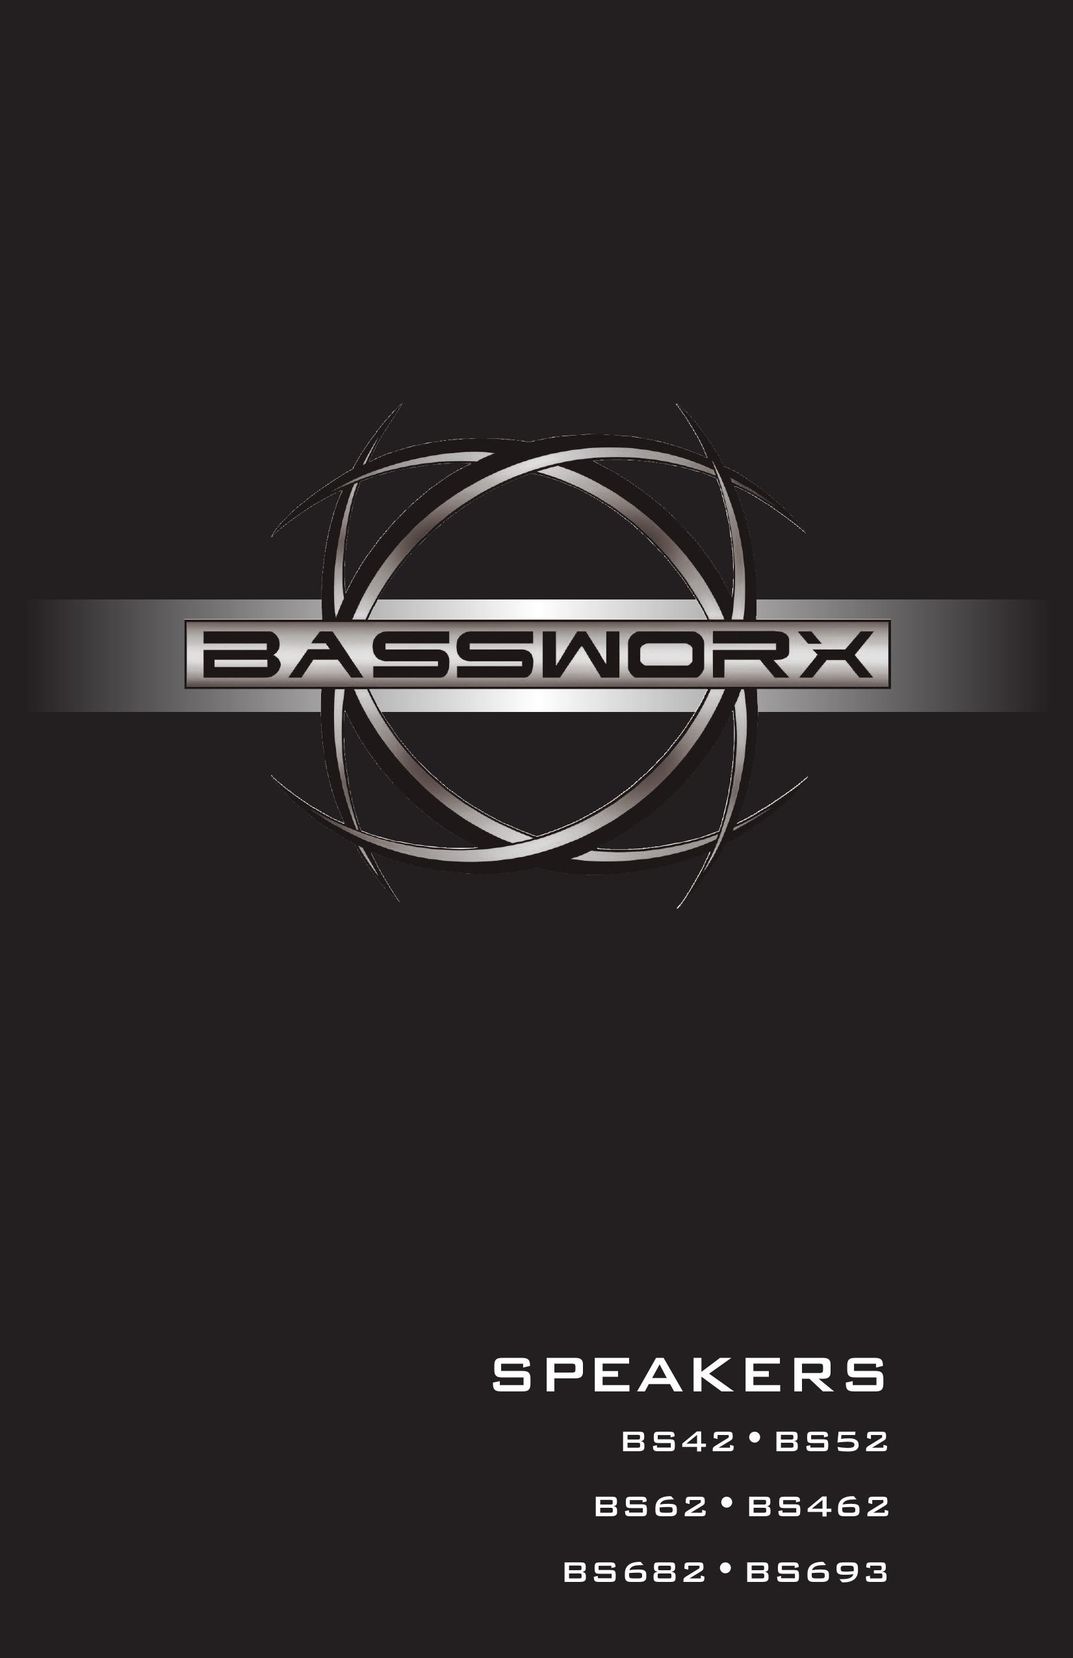 Bassworx BS62 Car Speaker User Manual